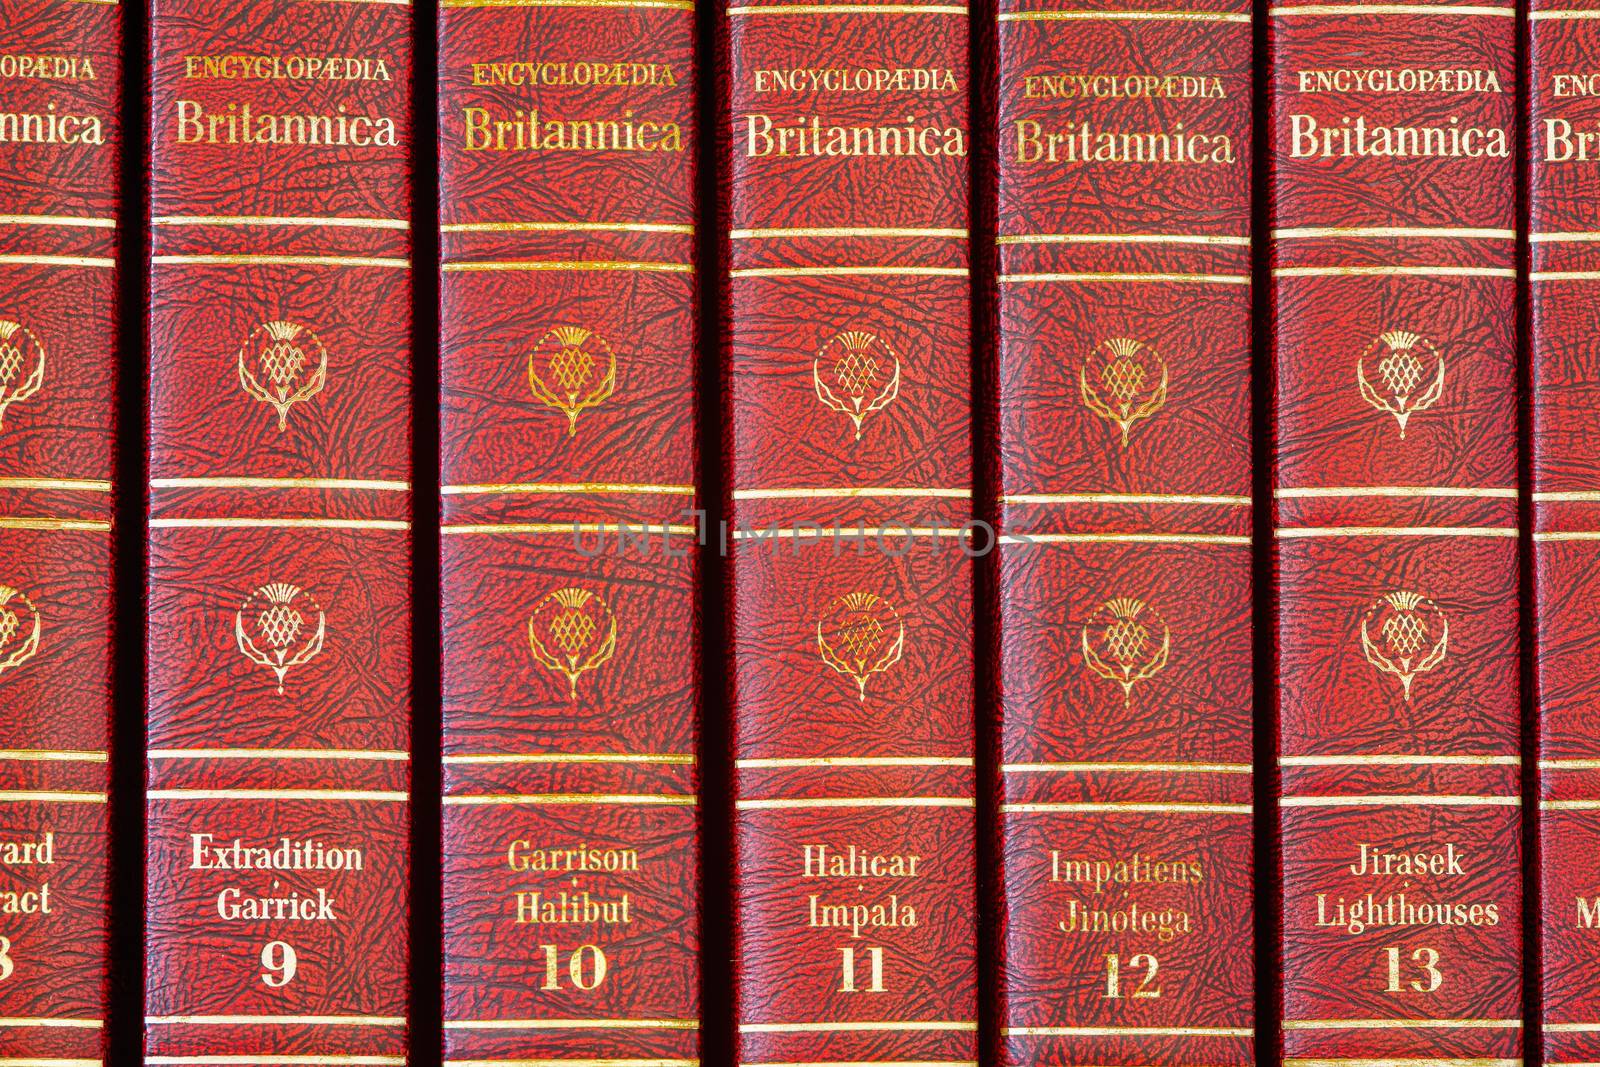 Encyclopedia Britannica, 1965 edition by RnDmS